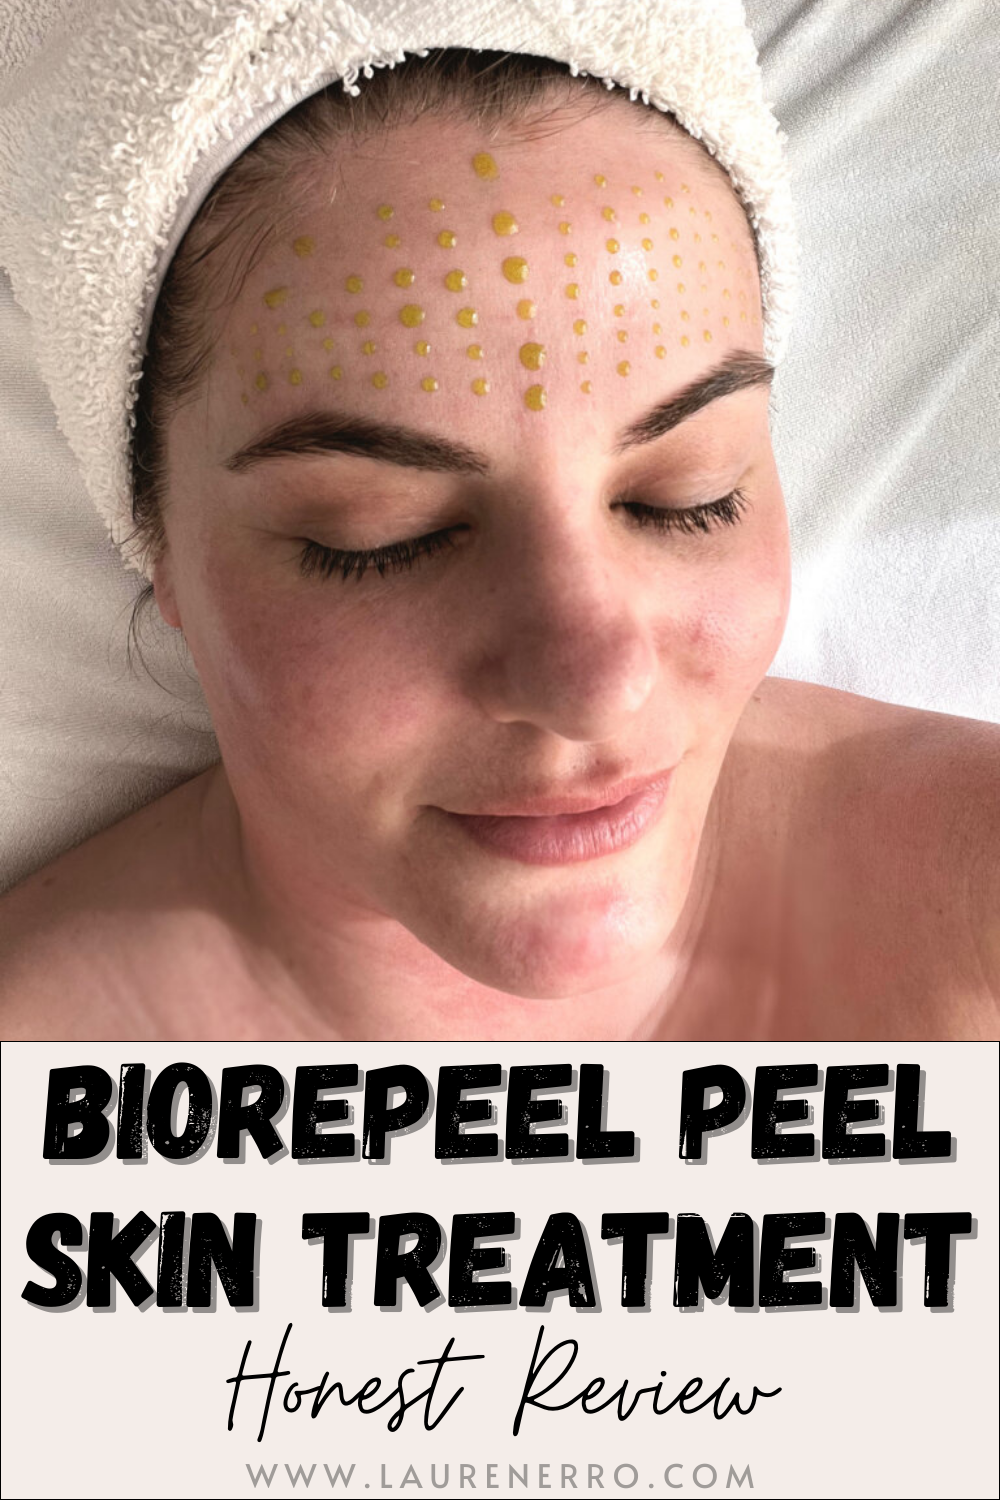 Honest review of the BioRepeel Peel Skin Treatment